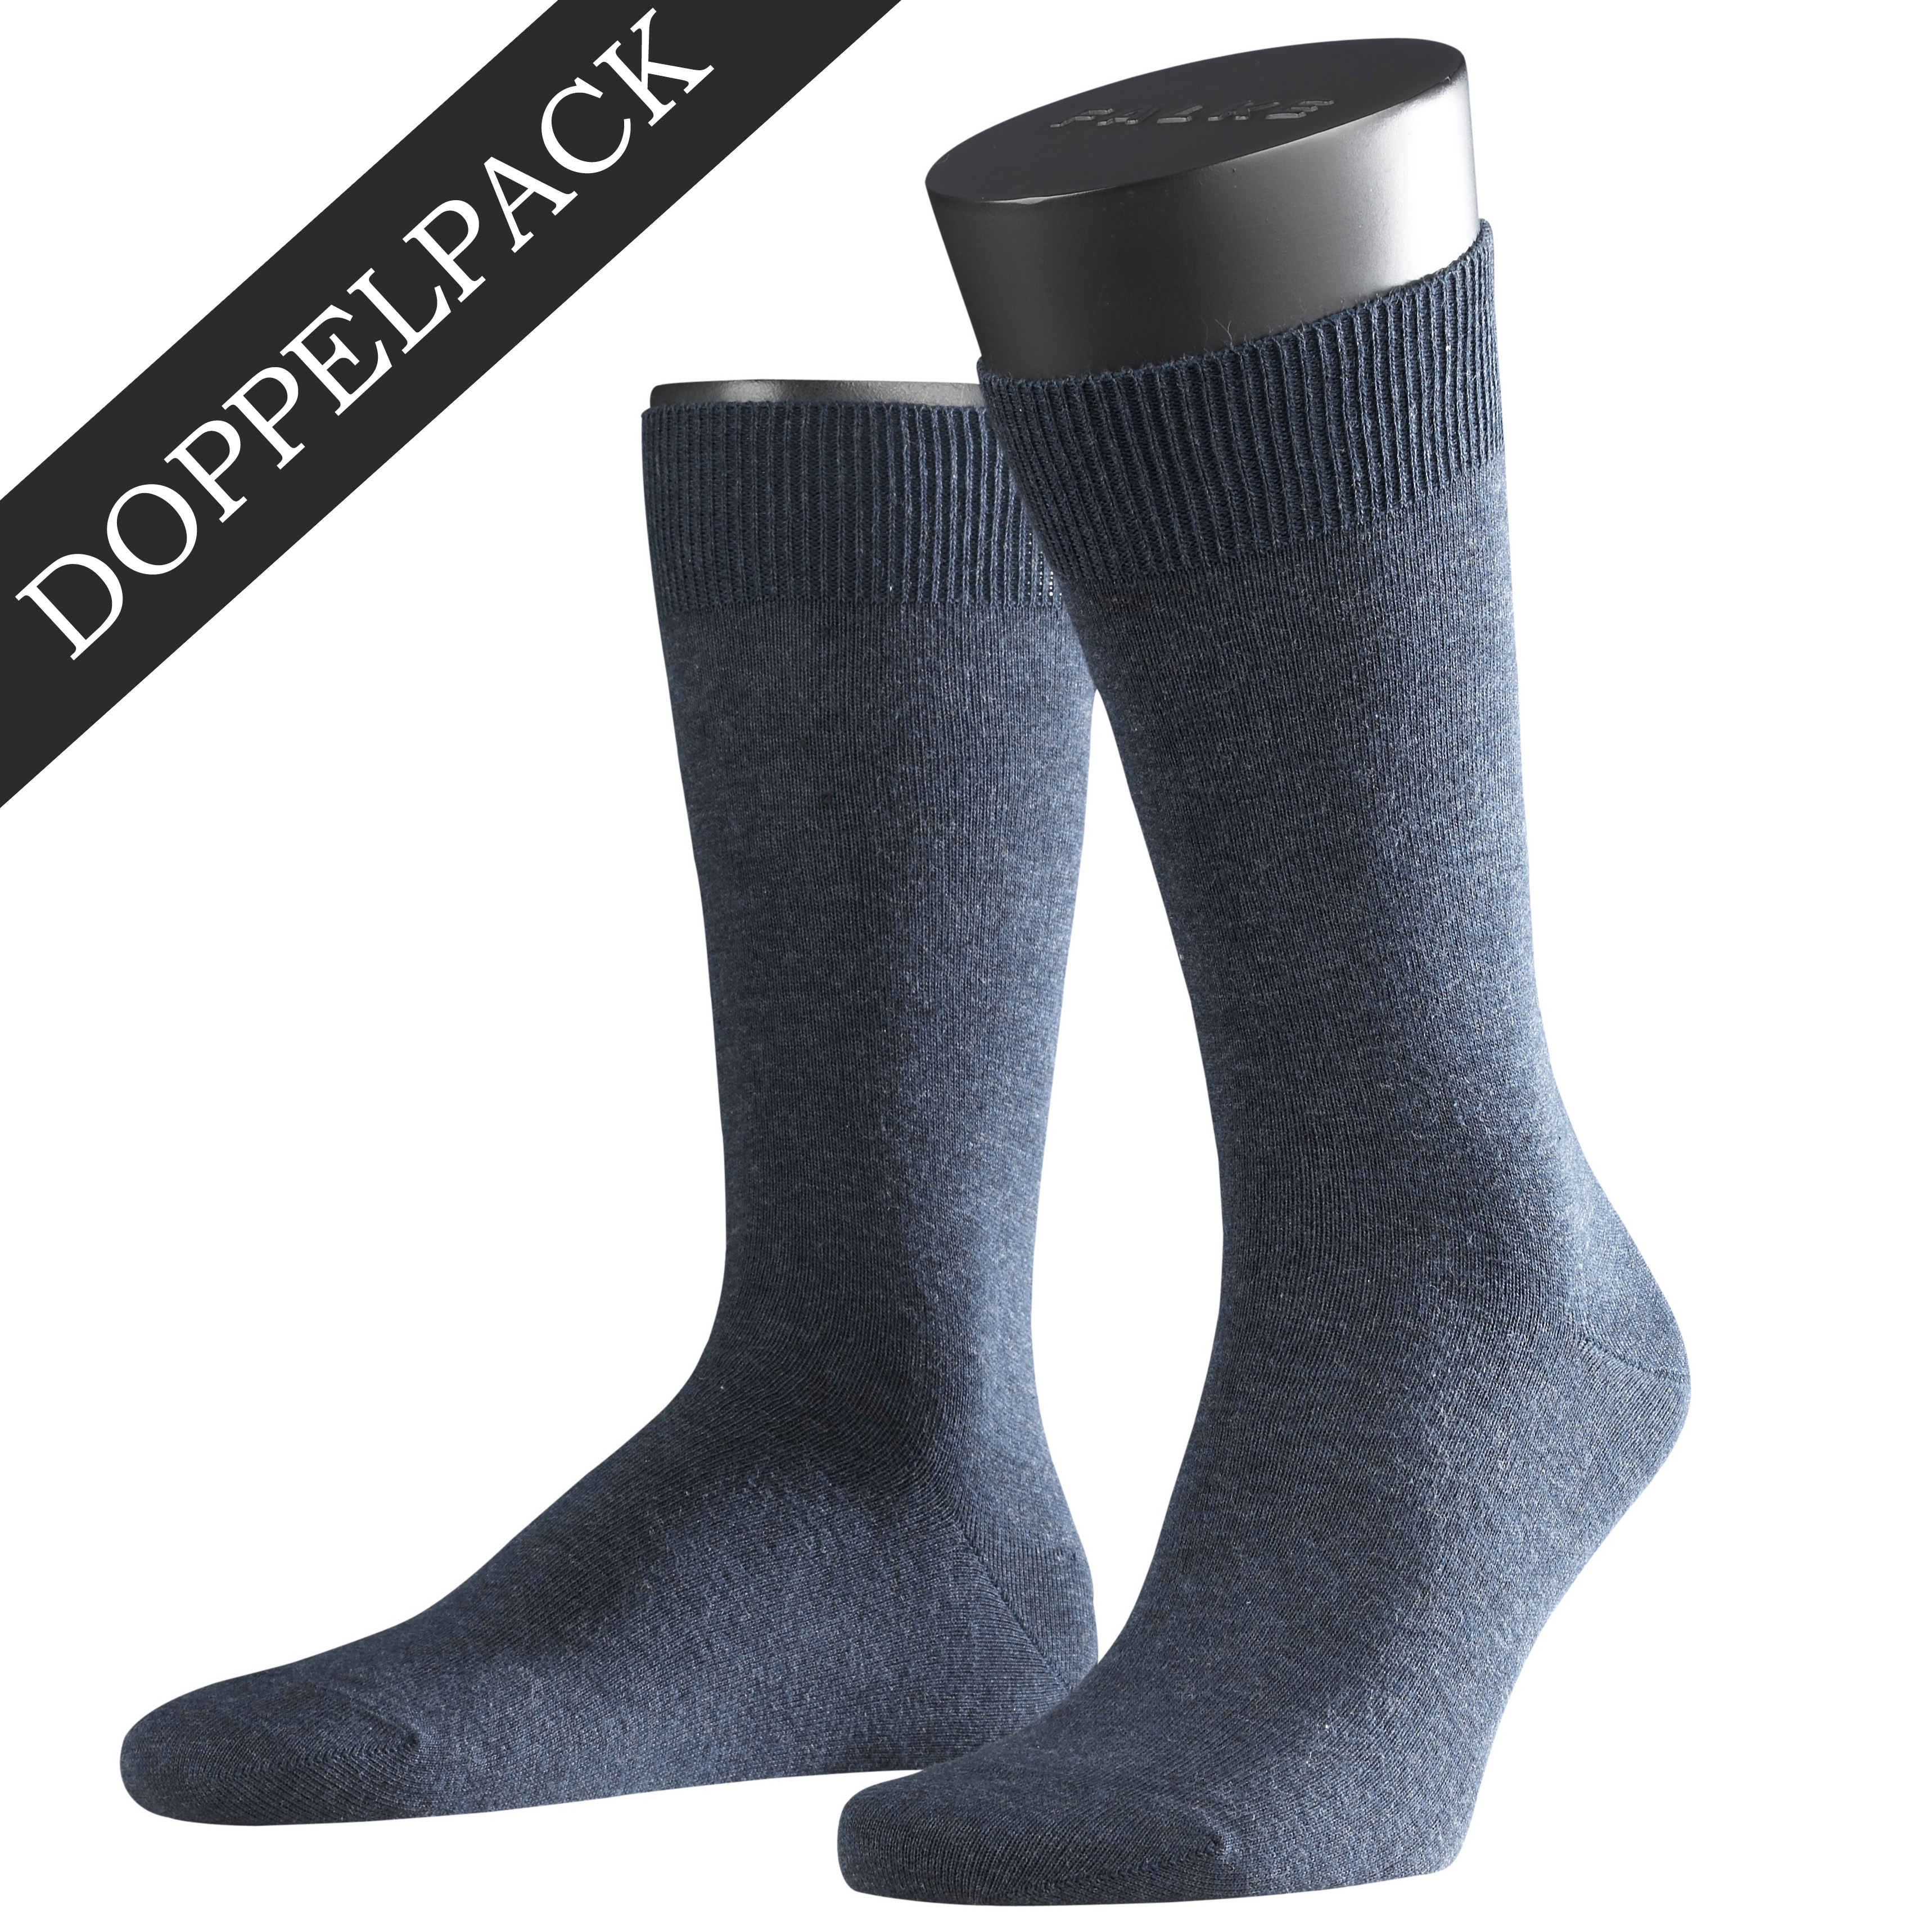 Falke Doppelpack Socke Swing indigo blau 14633 - 6490 Basic Baumwolle